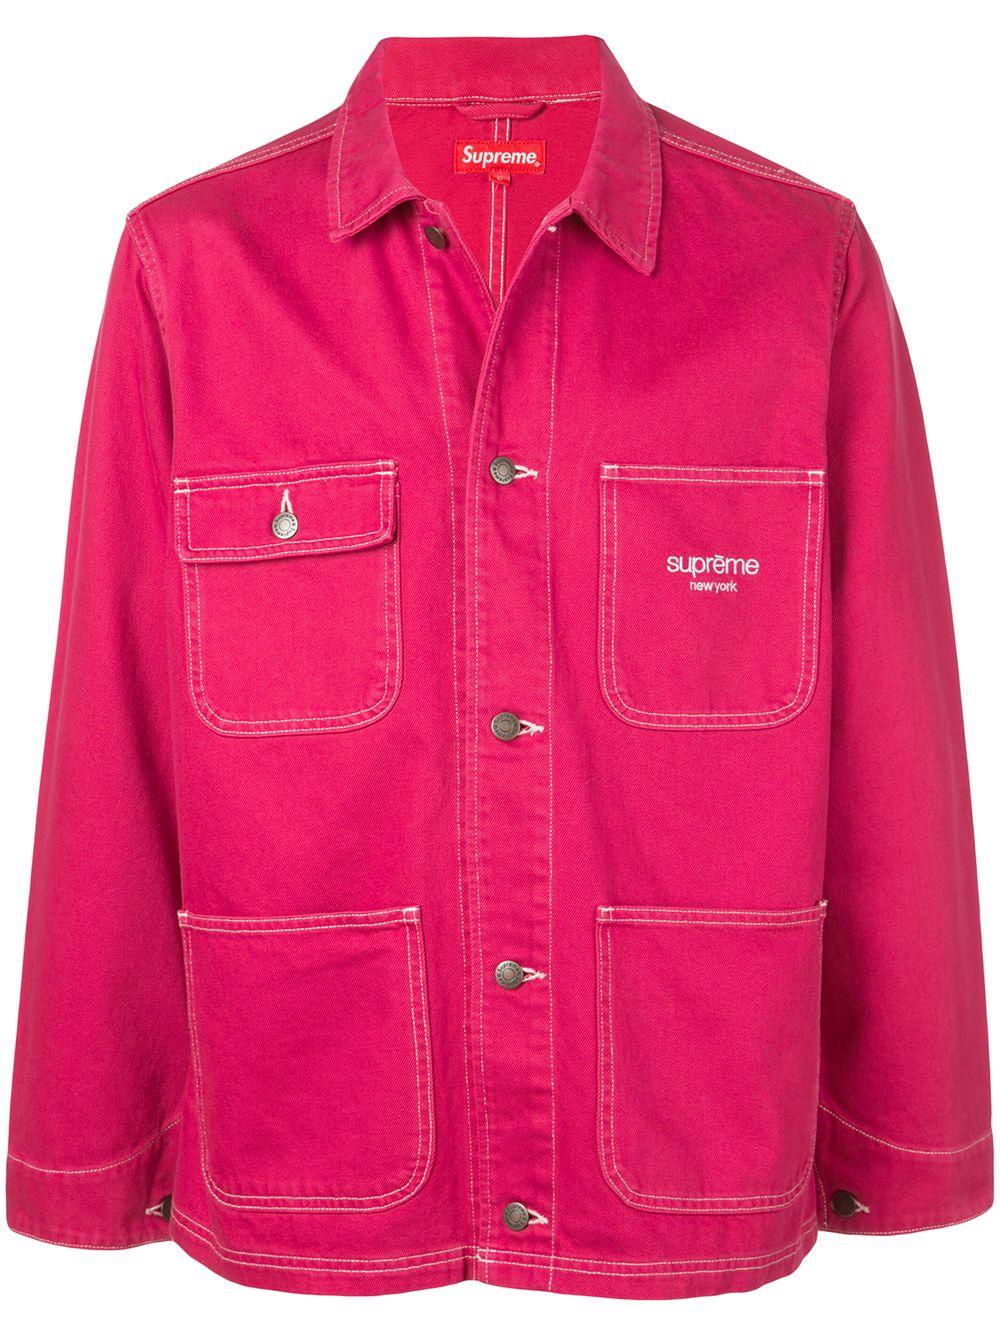 Supreme Men's Pink Denim Chore Jacket